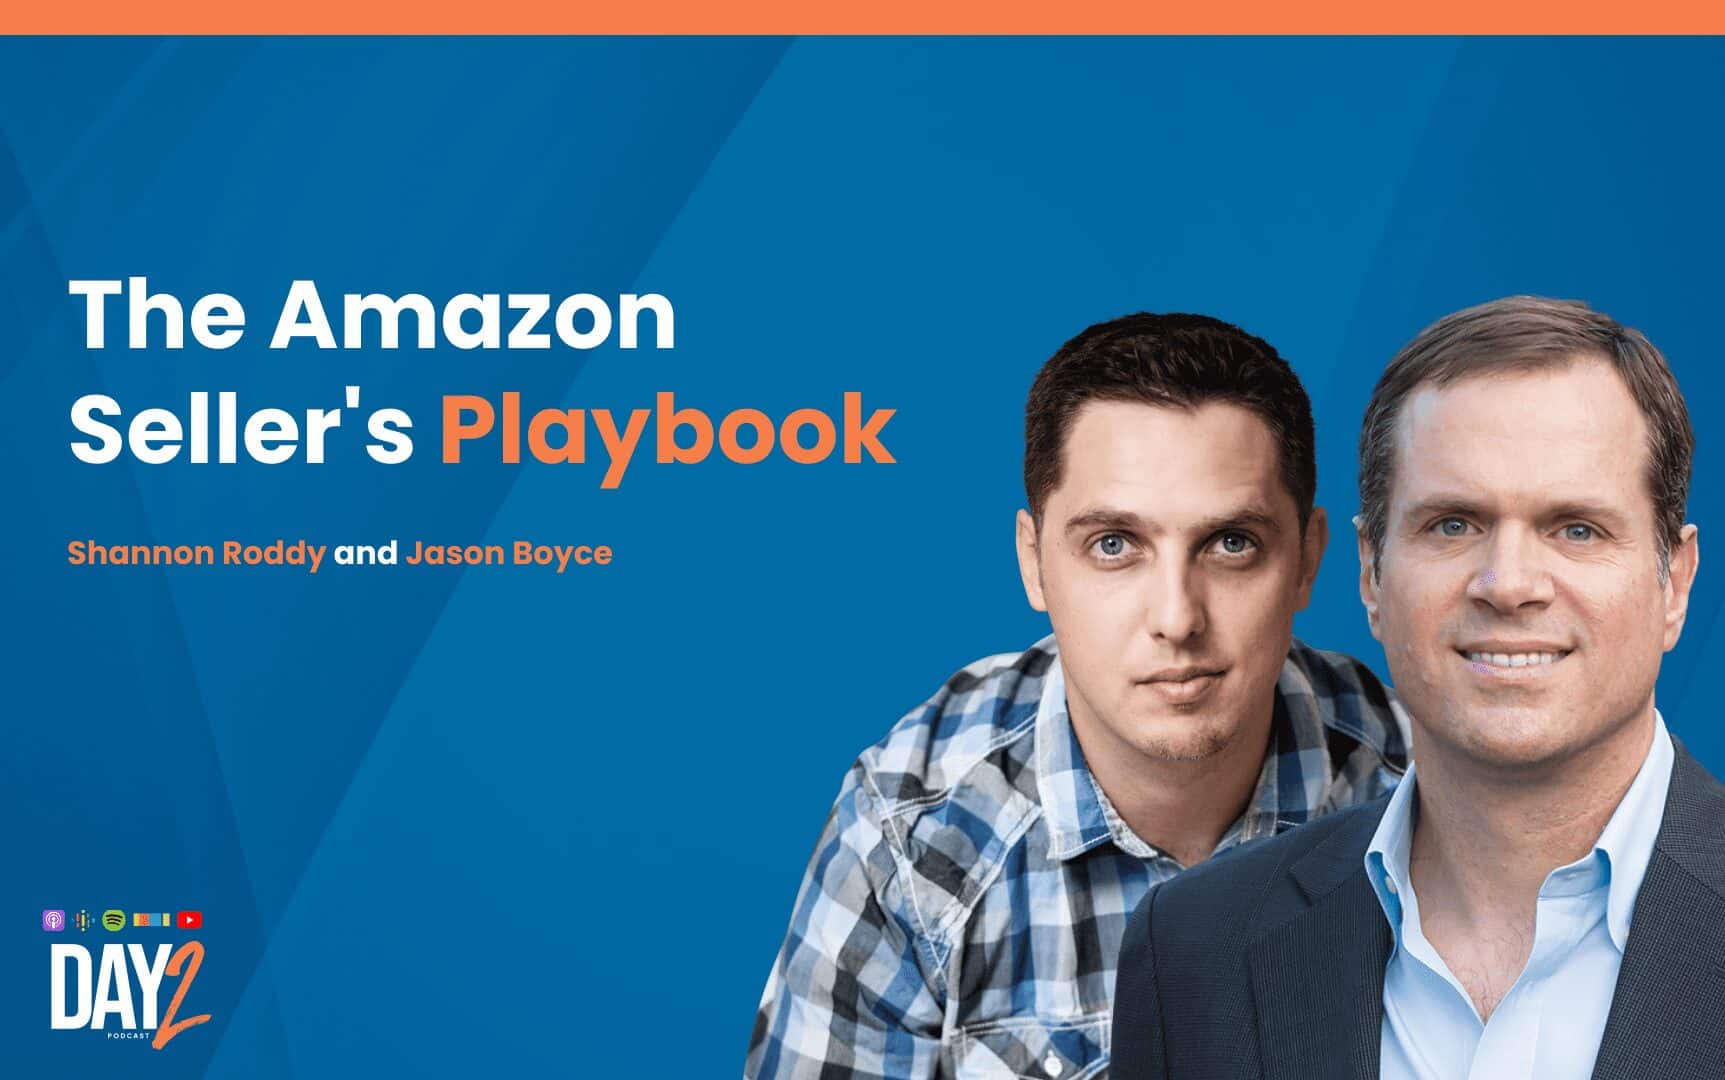 Amazon Seller's playbook